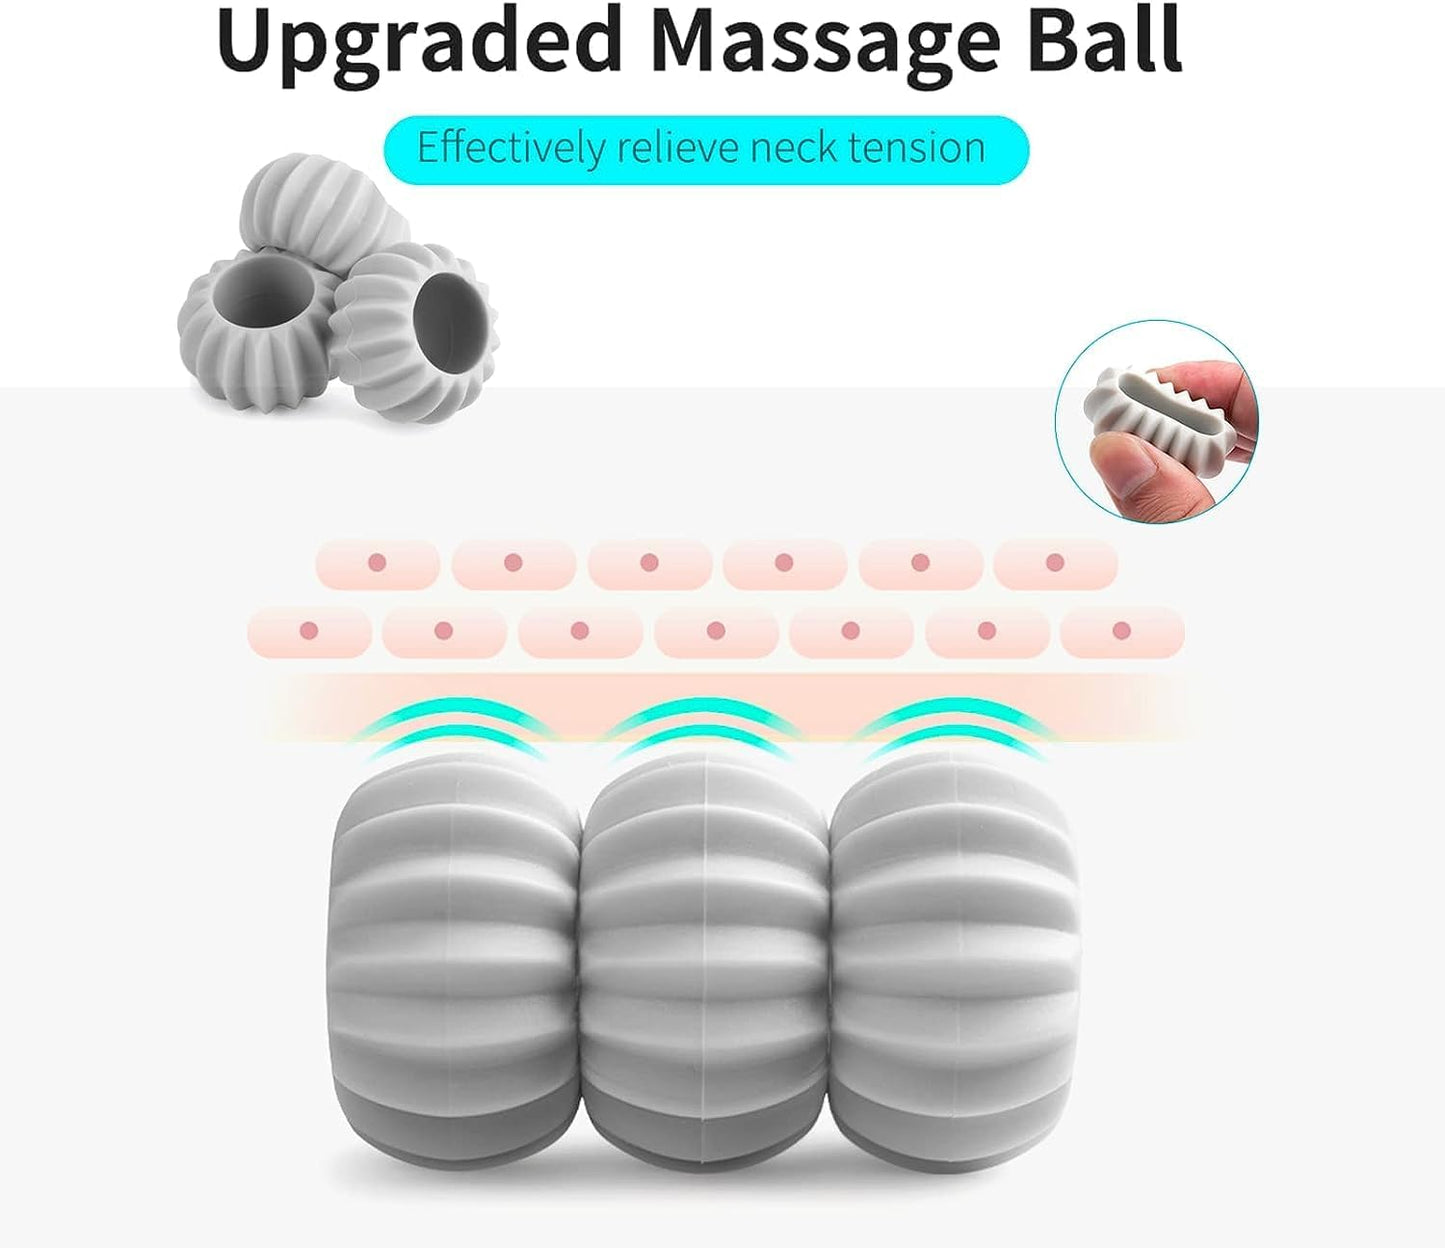 Rejopes Neck Massager - Neck and Shoulder Handheld Massager with 6 Balls Massage Point - Premium Deep Tissue Relief for Neck, Back, Shoulders, and Legs (Blue)